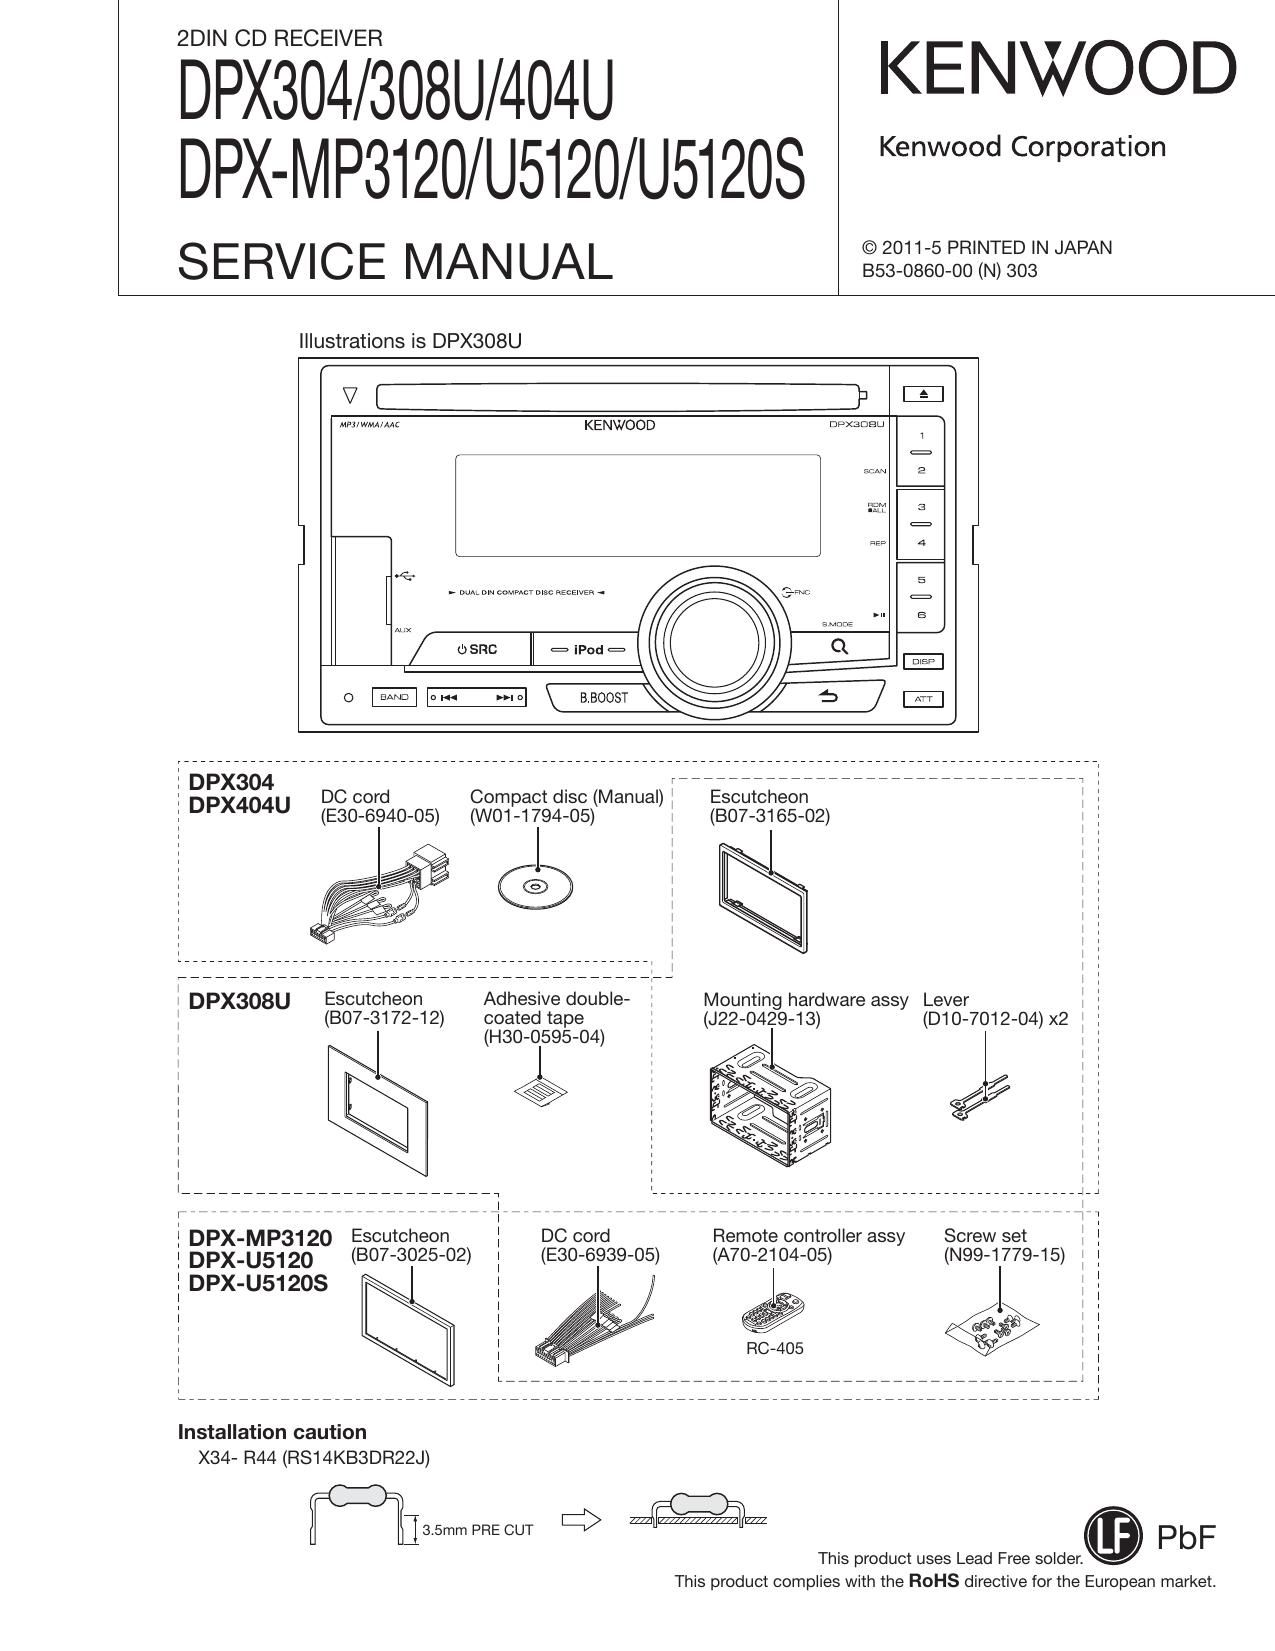 Kenwood DPX 308 U Service Manual